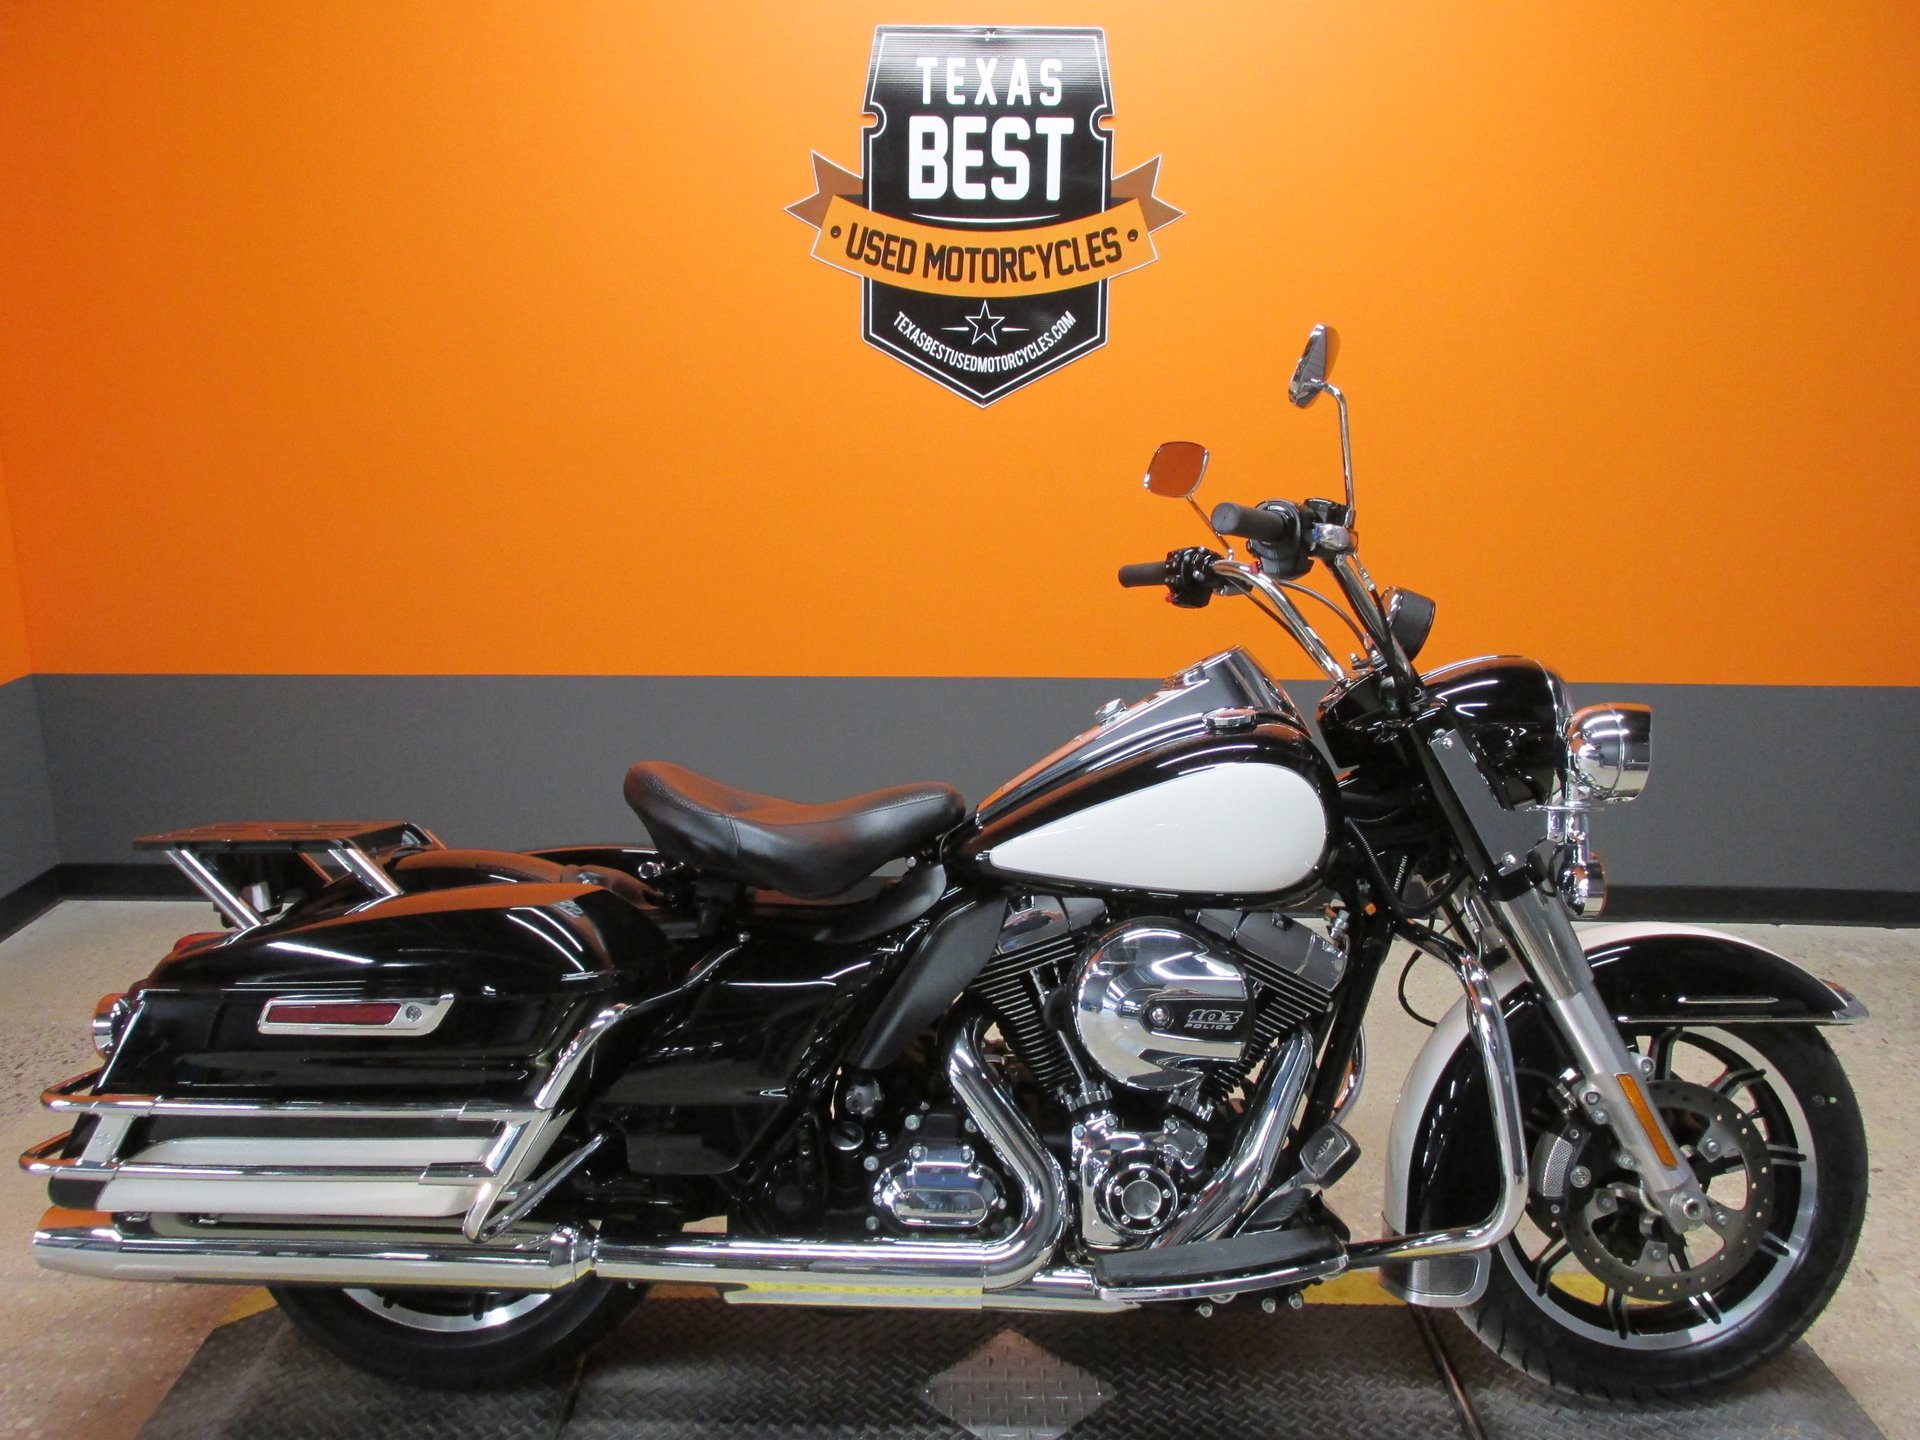 2016 Harley Davidson Road King American Motorcycle Trading Company Used Harley Davidson Motorcycles